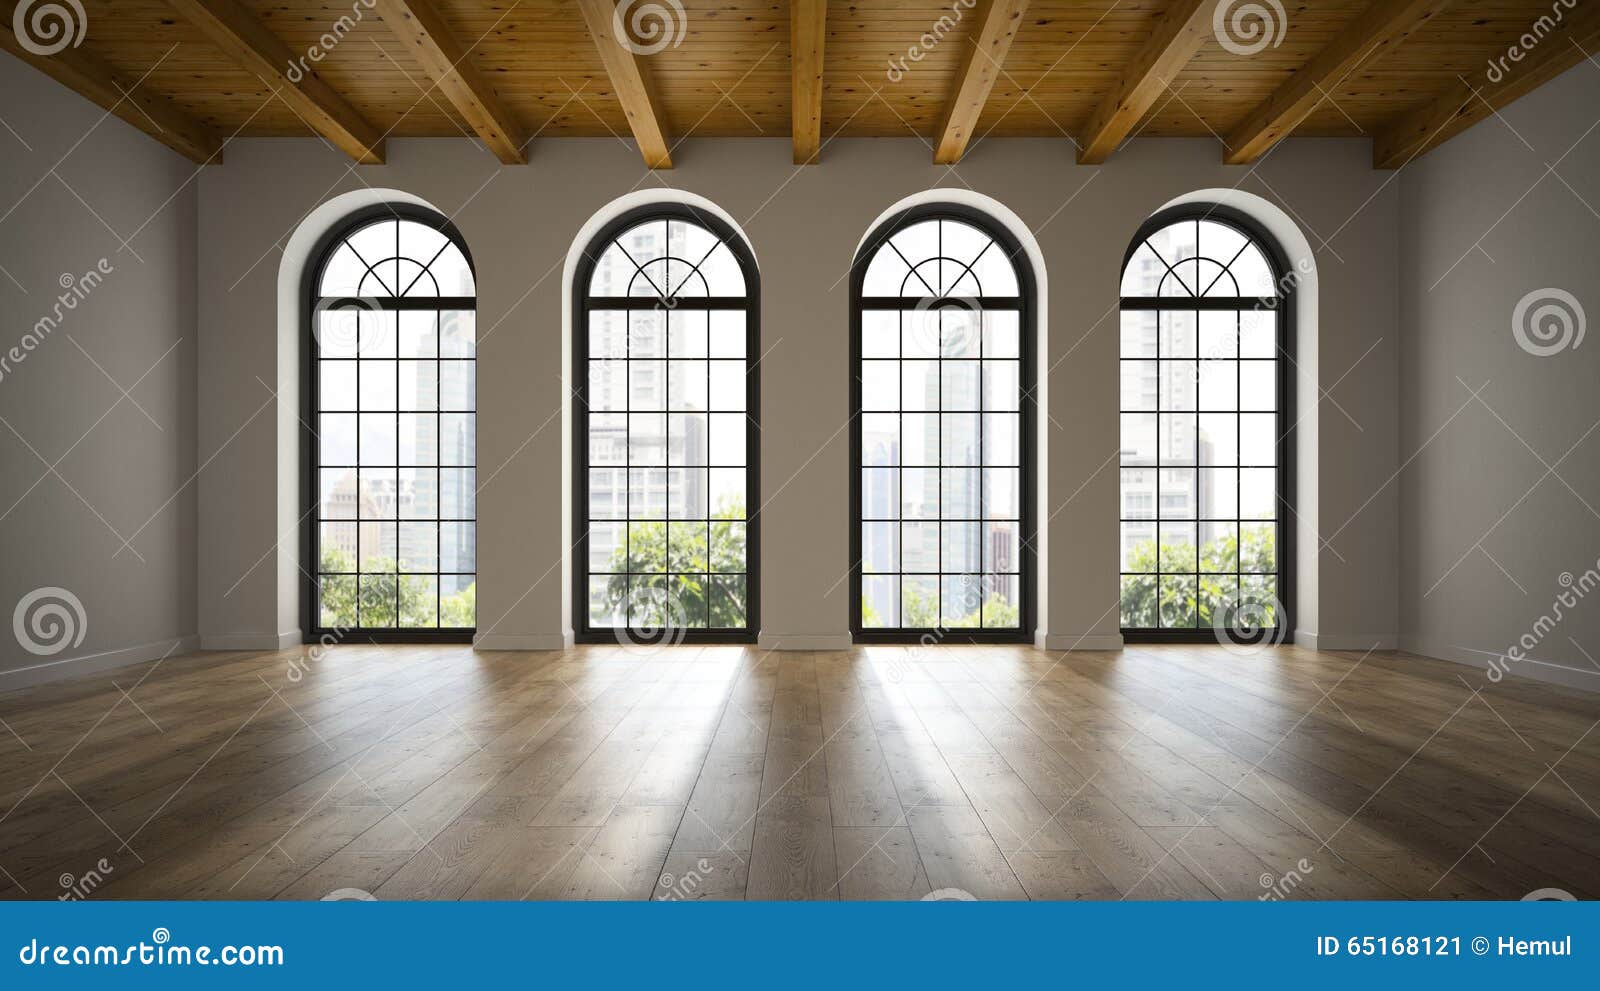 empty loft room with arc windows 3d rendering